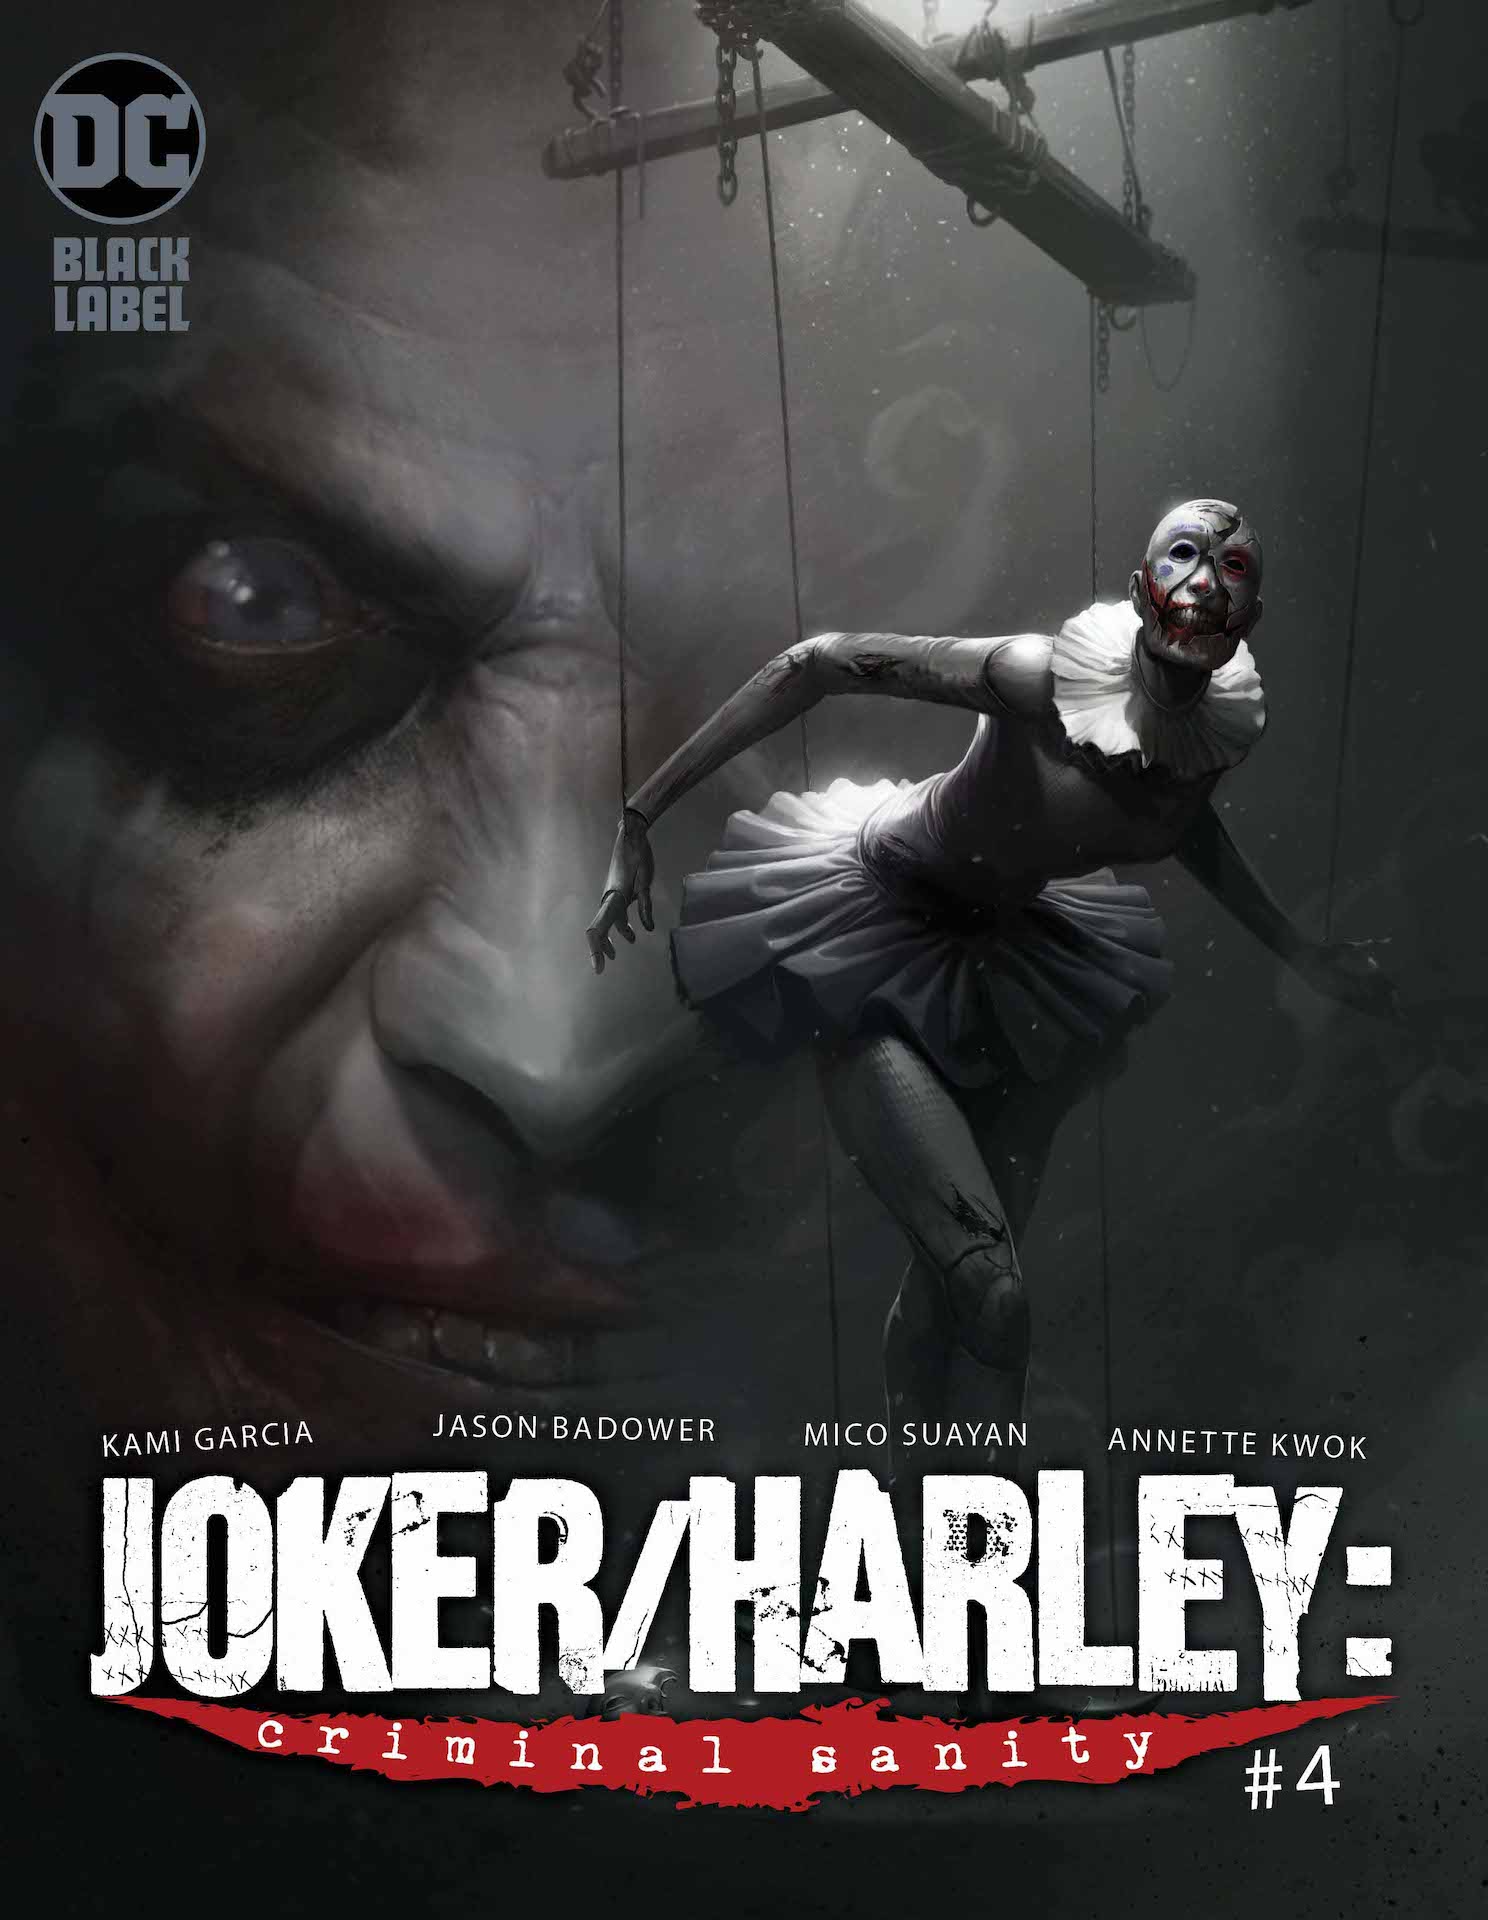 DC Preview: Joker Harley Criminal Sanity #4